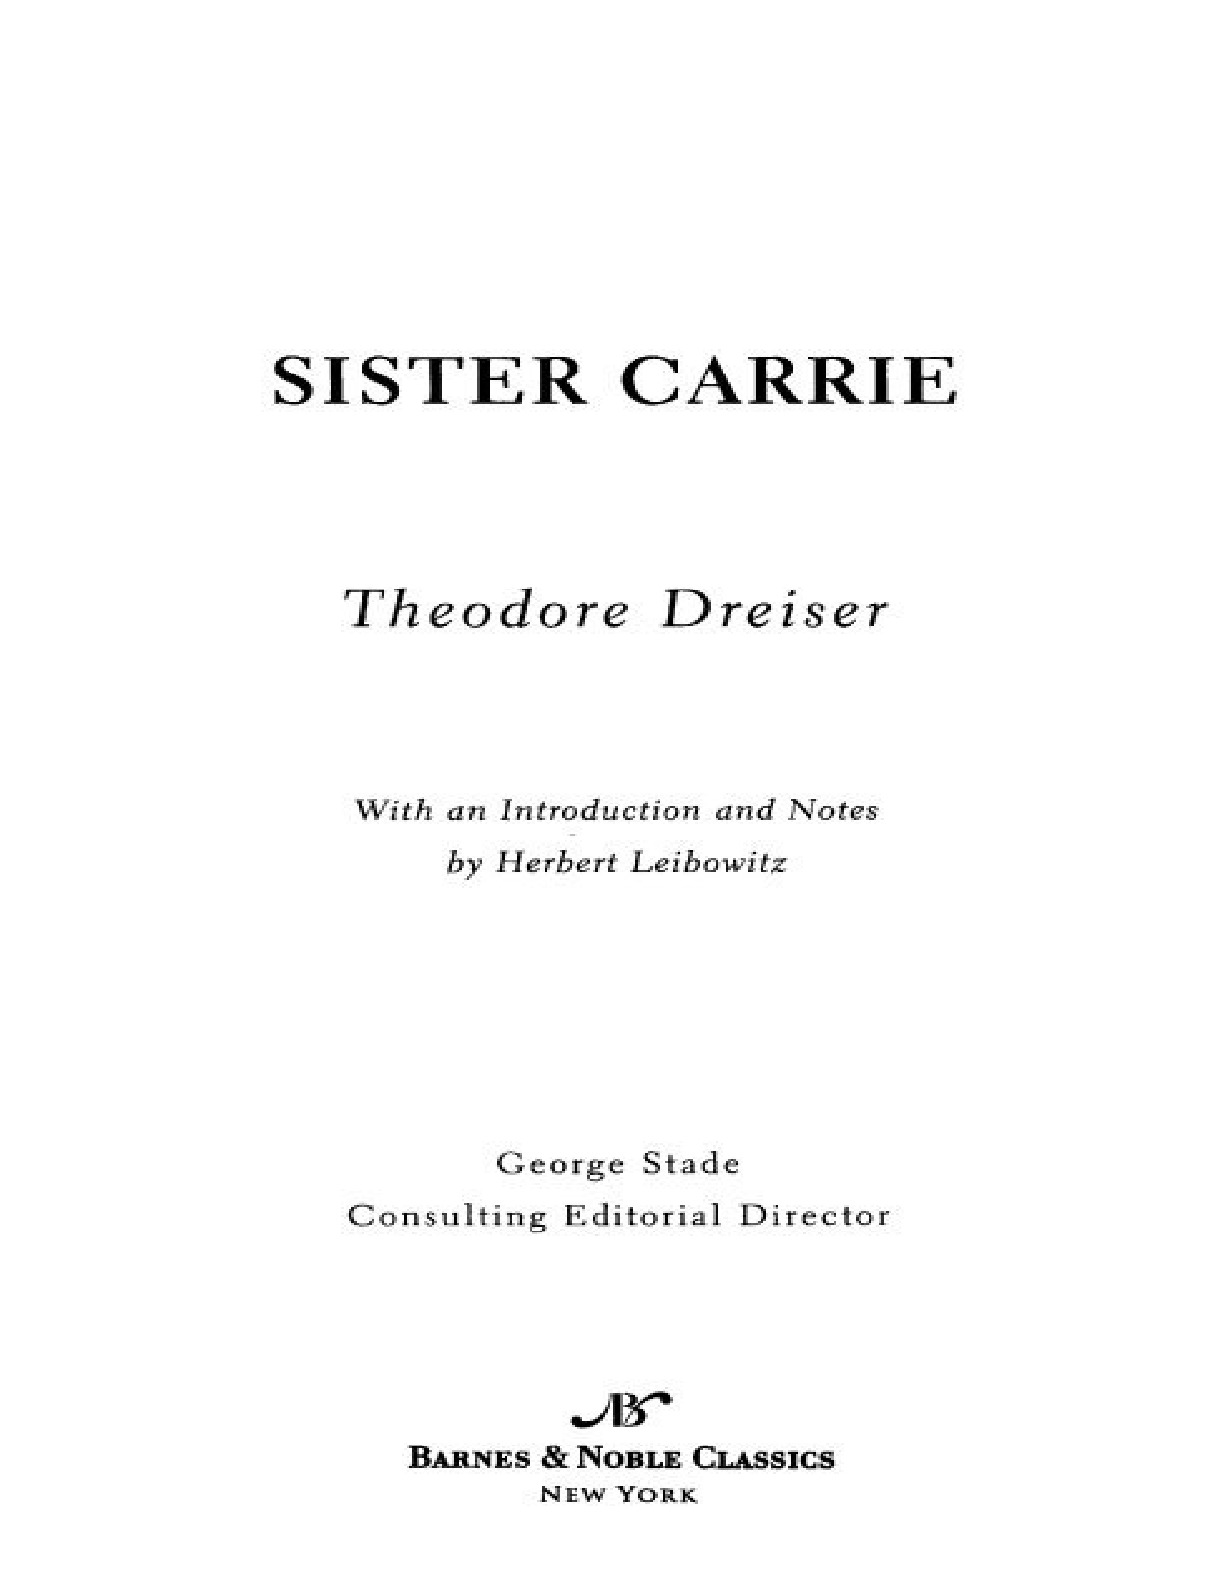 Sister Carrie (Barnes & Noble Classics Series) – Theodore Dreiser